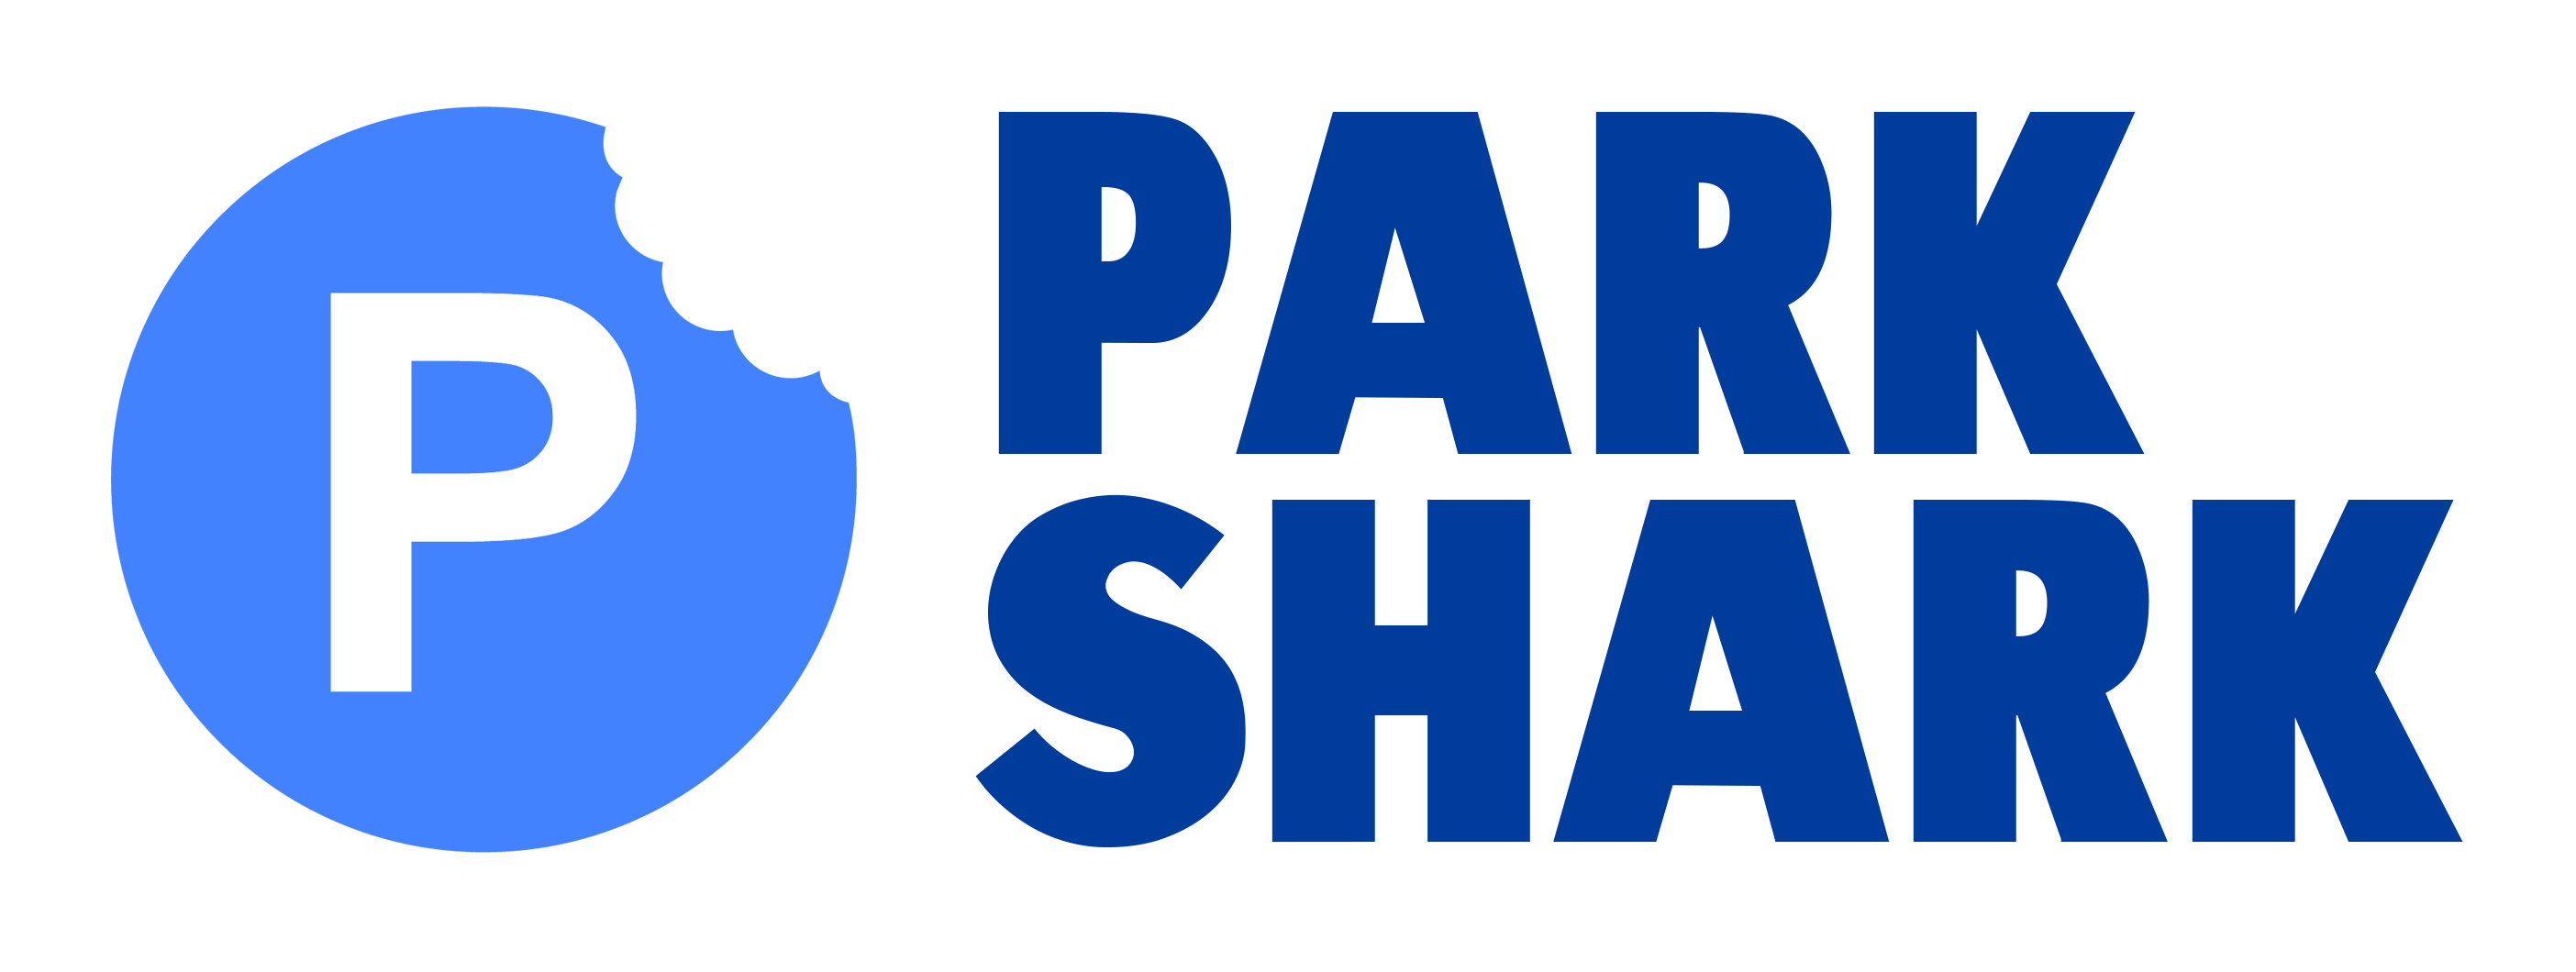 Park shark logo